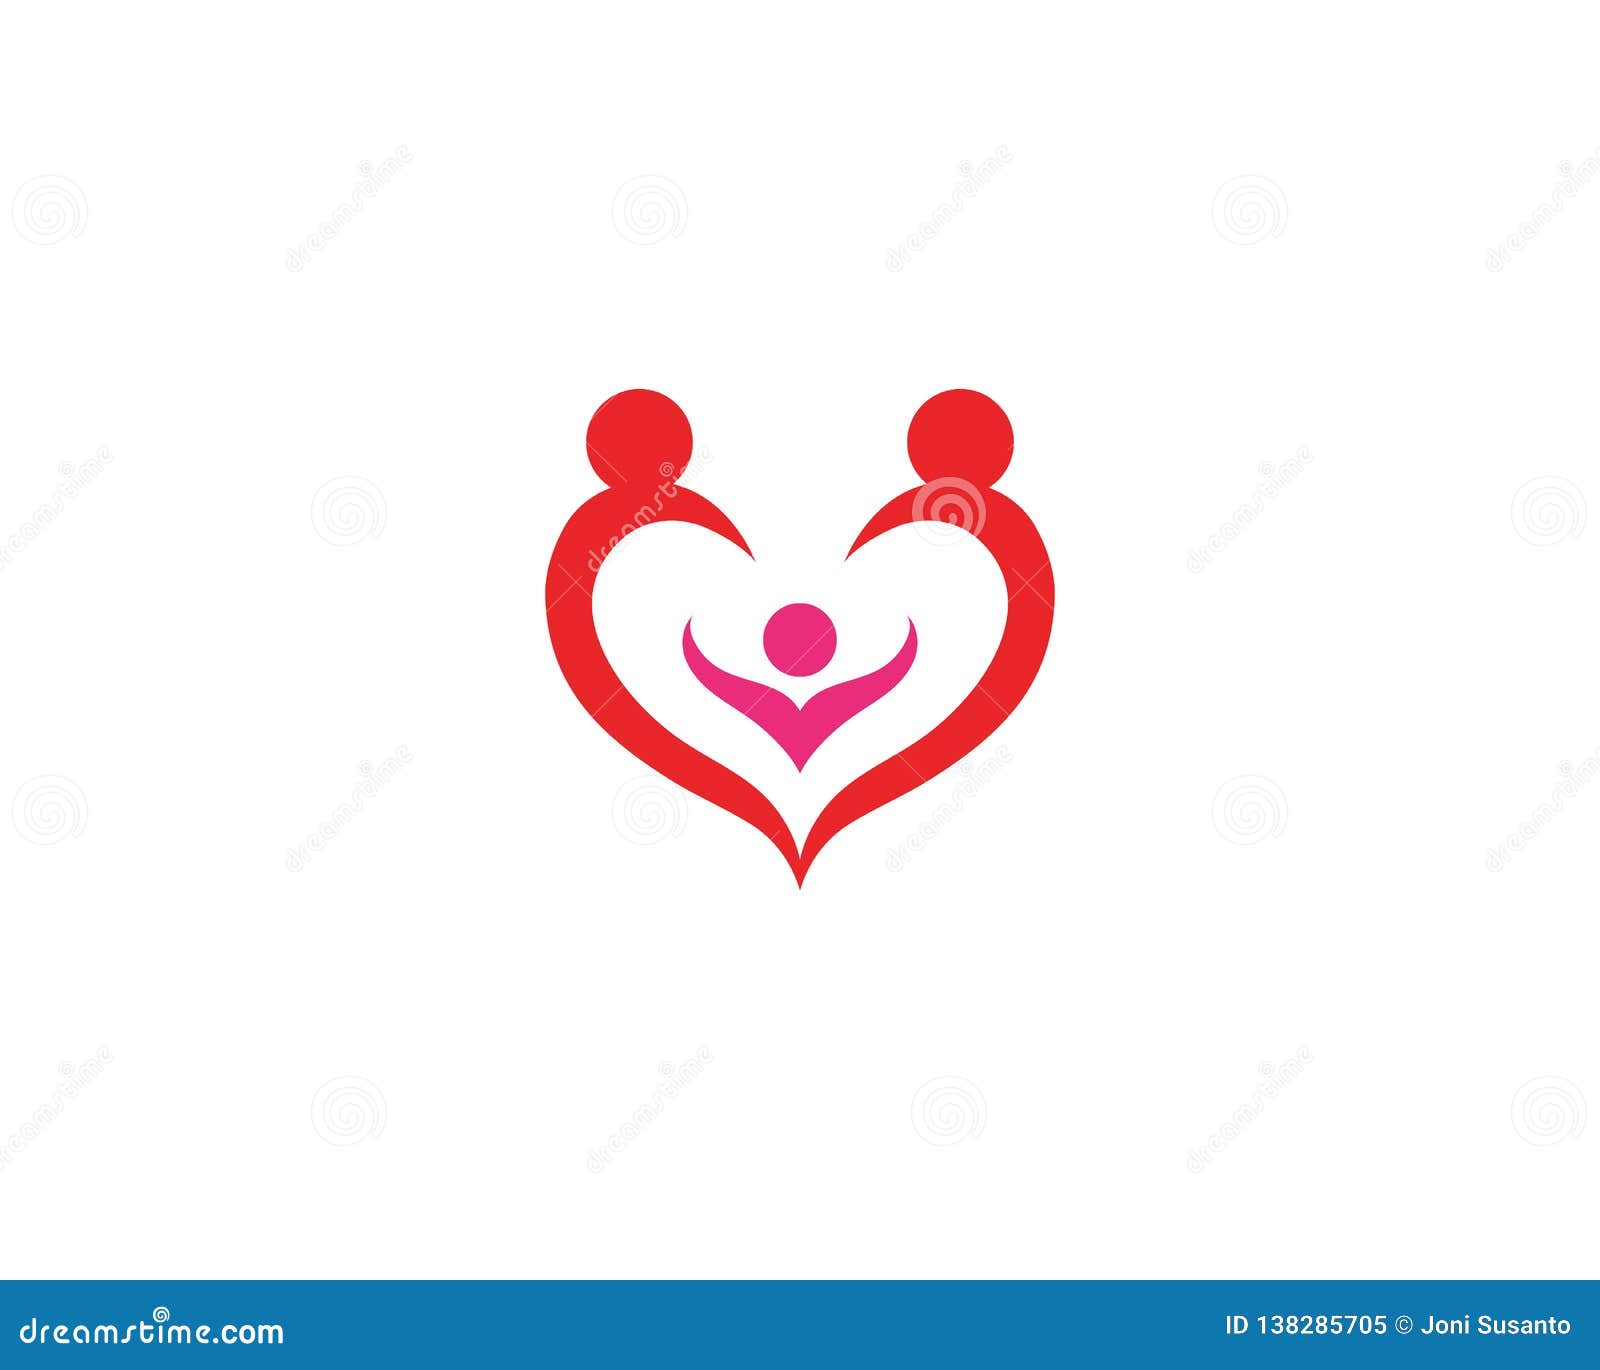 Love heart logo vectors stock vector. Illustration of february - 138285705